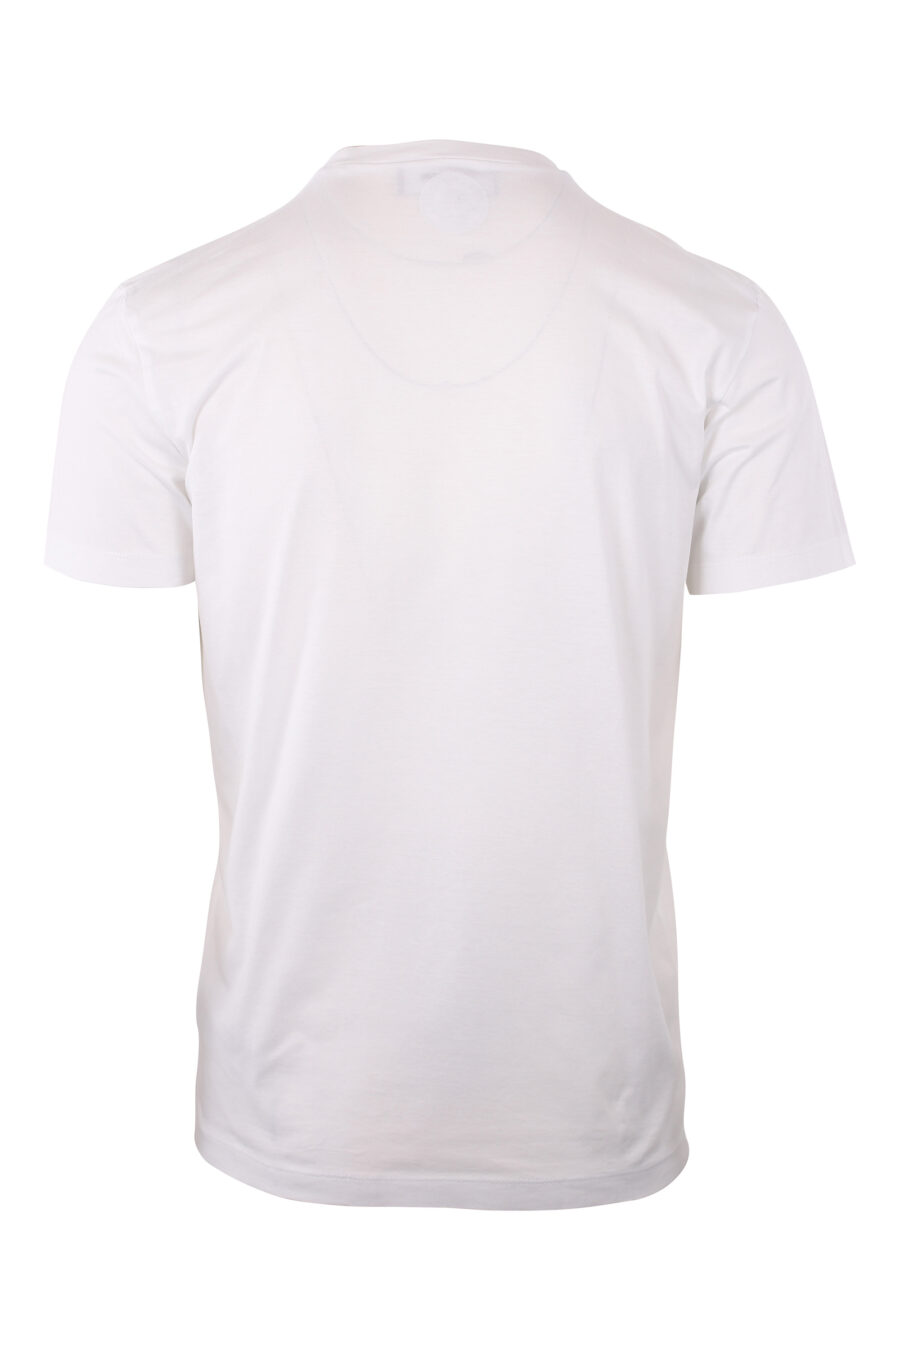 White T-shirt with black "ibra" logo - IMG 2003